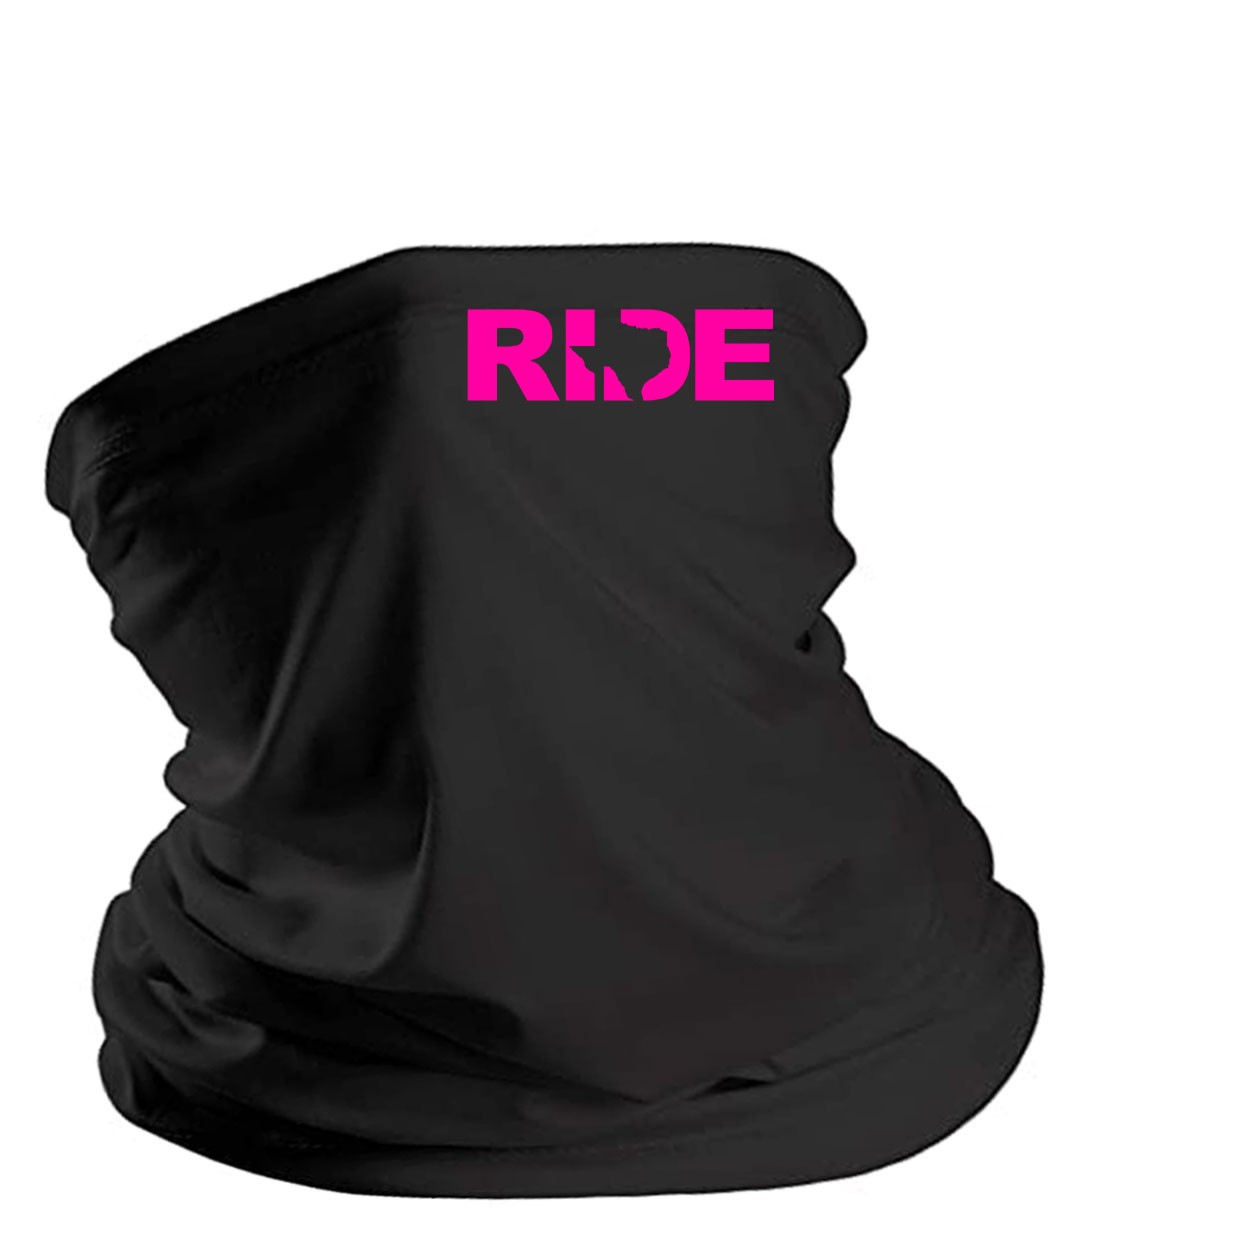 Ride Texas Night Out Lightweight Neck Gaiter Face Mask Black (Pink Logo)